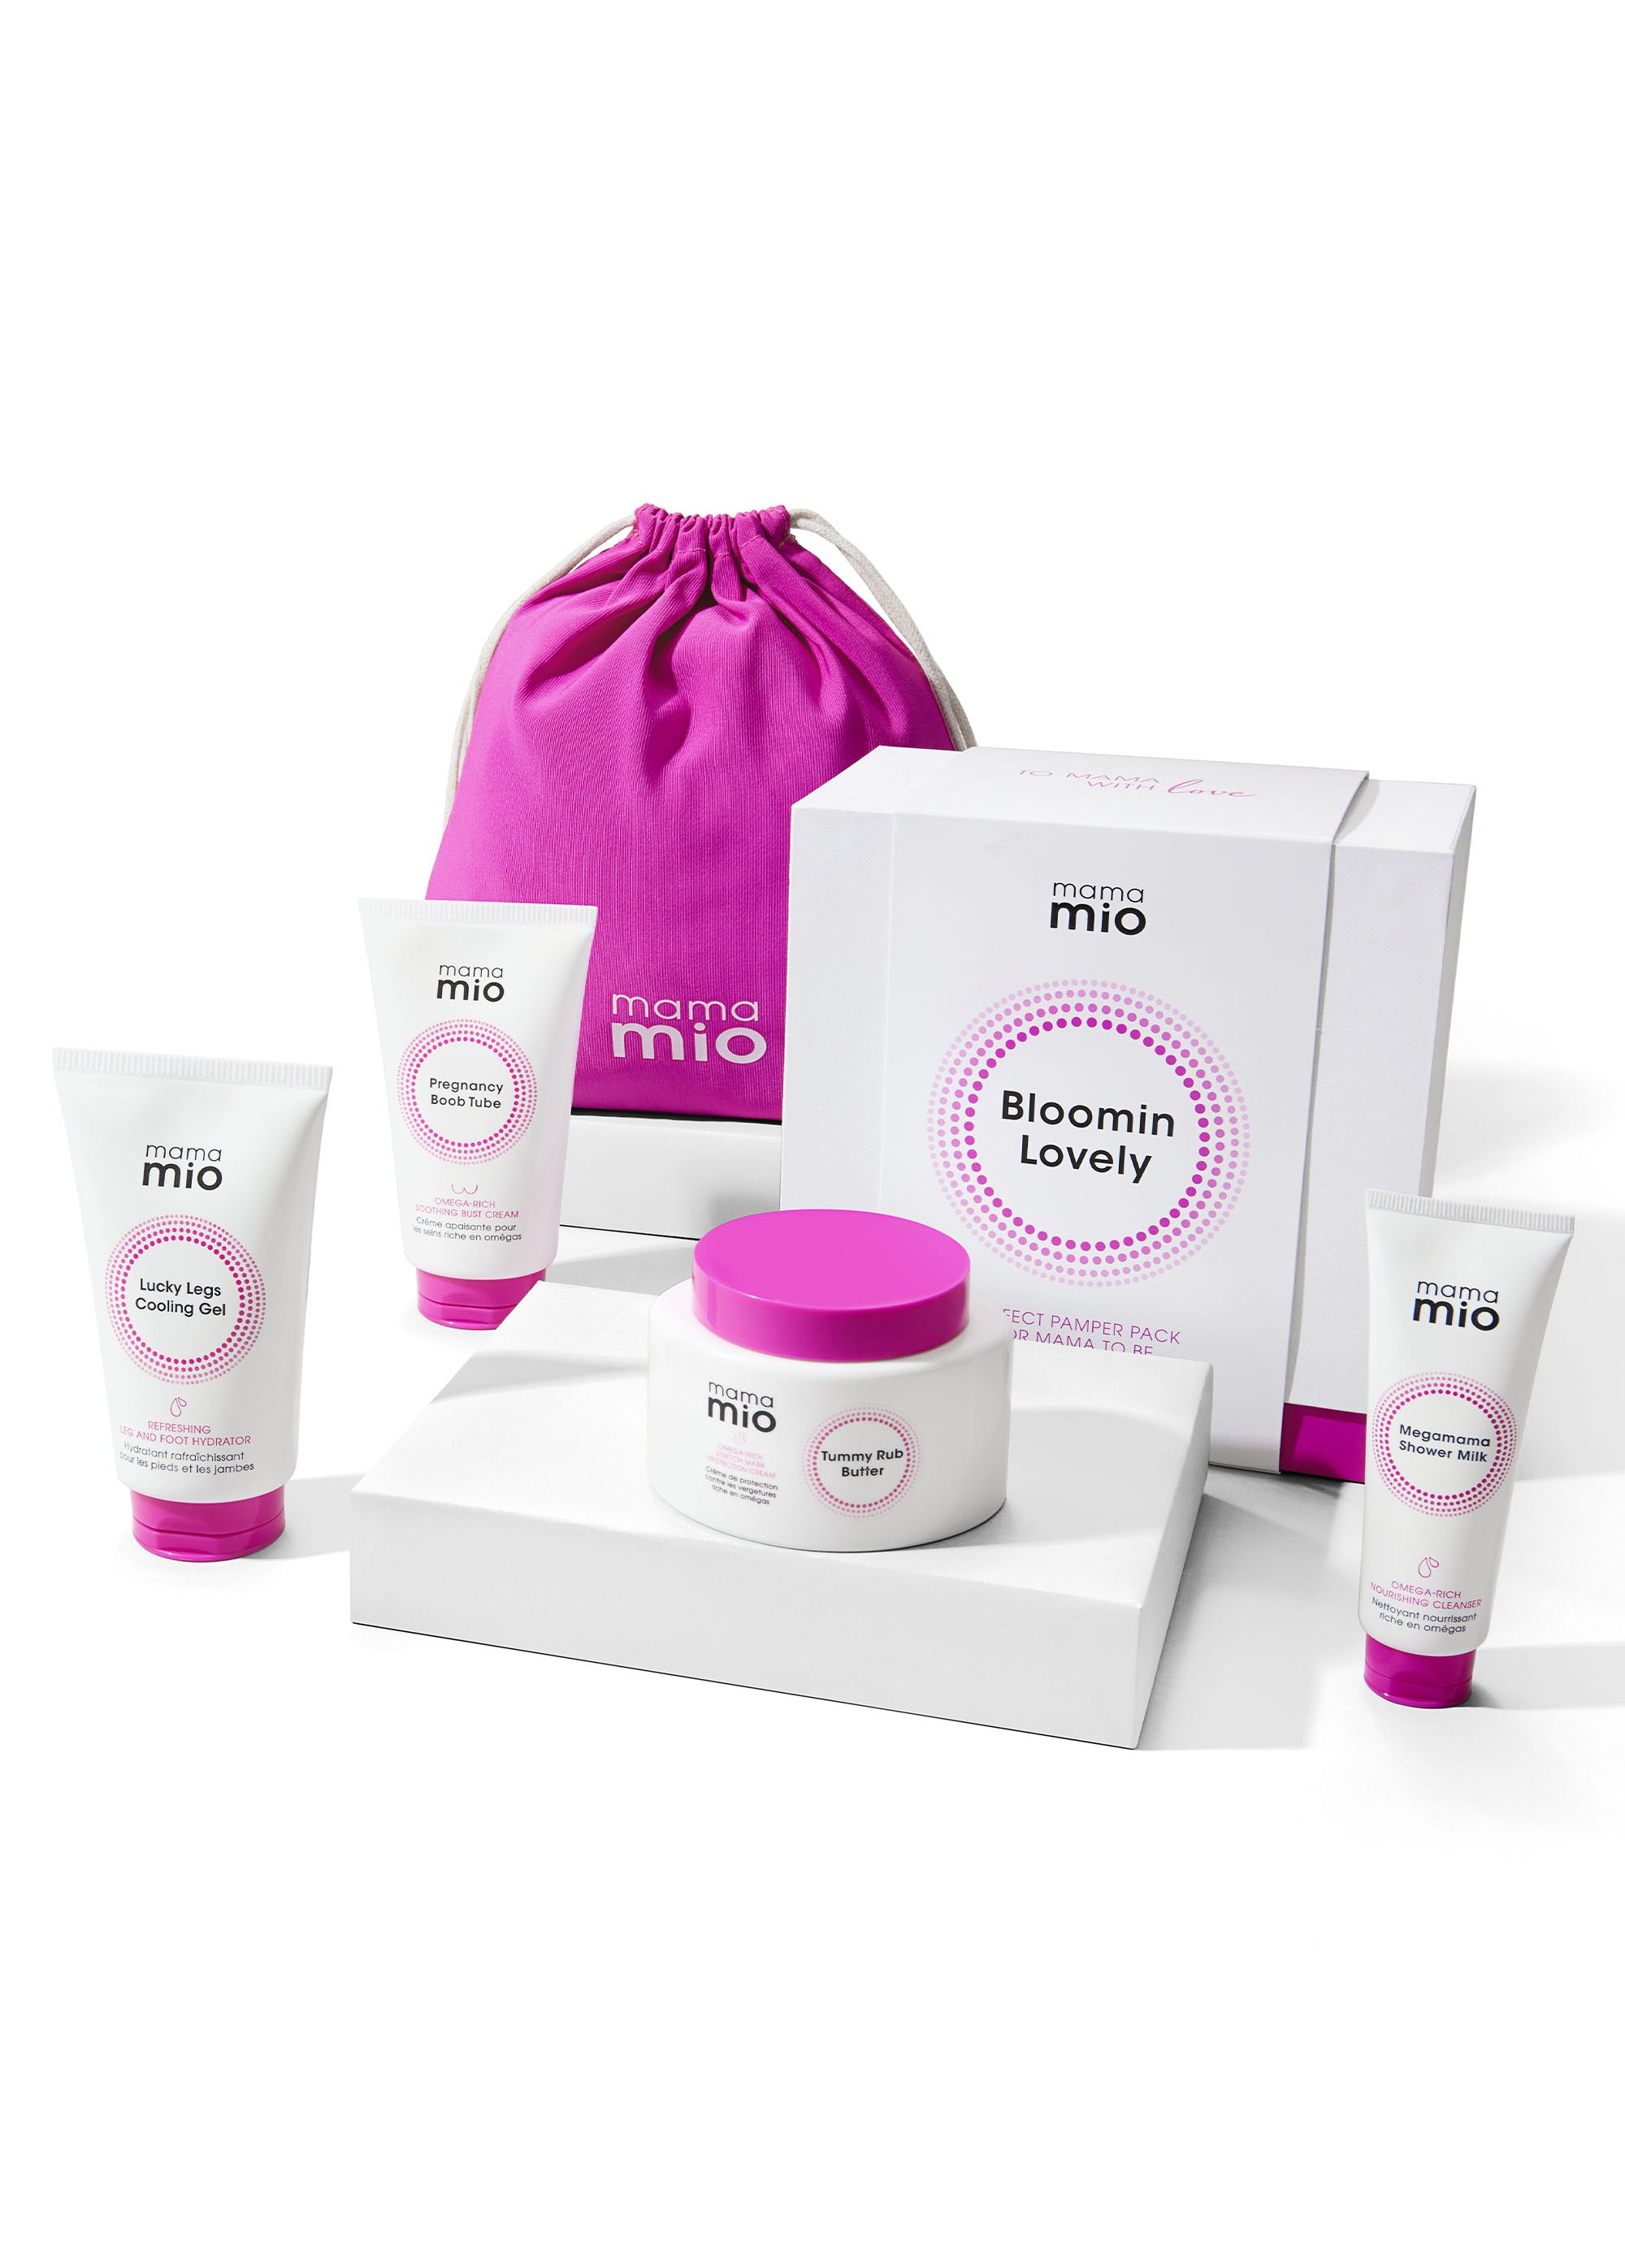 Mama Mio Pregnancy Essentials Kit | danadurand